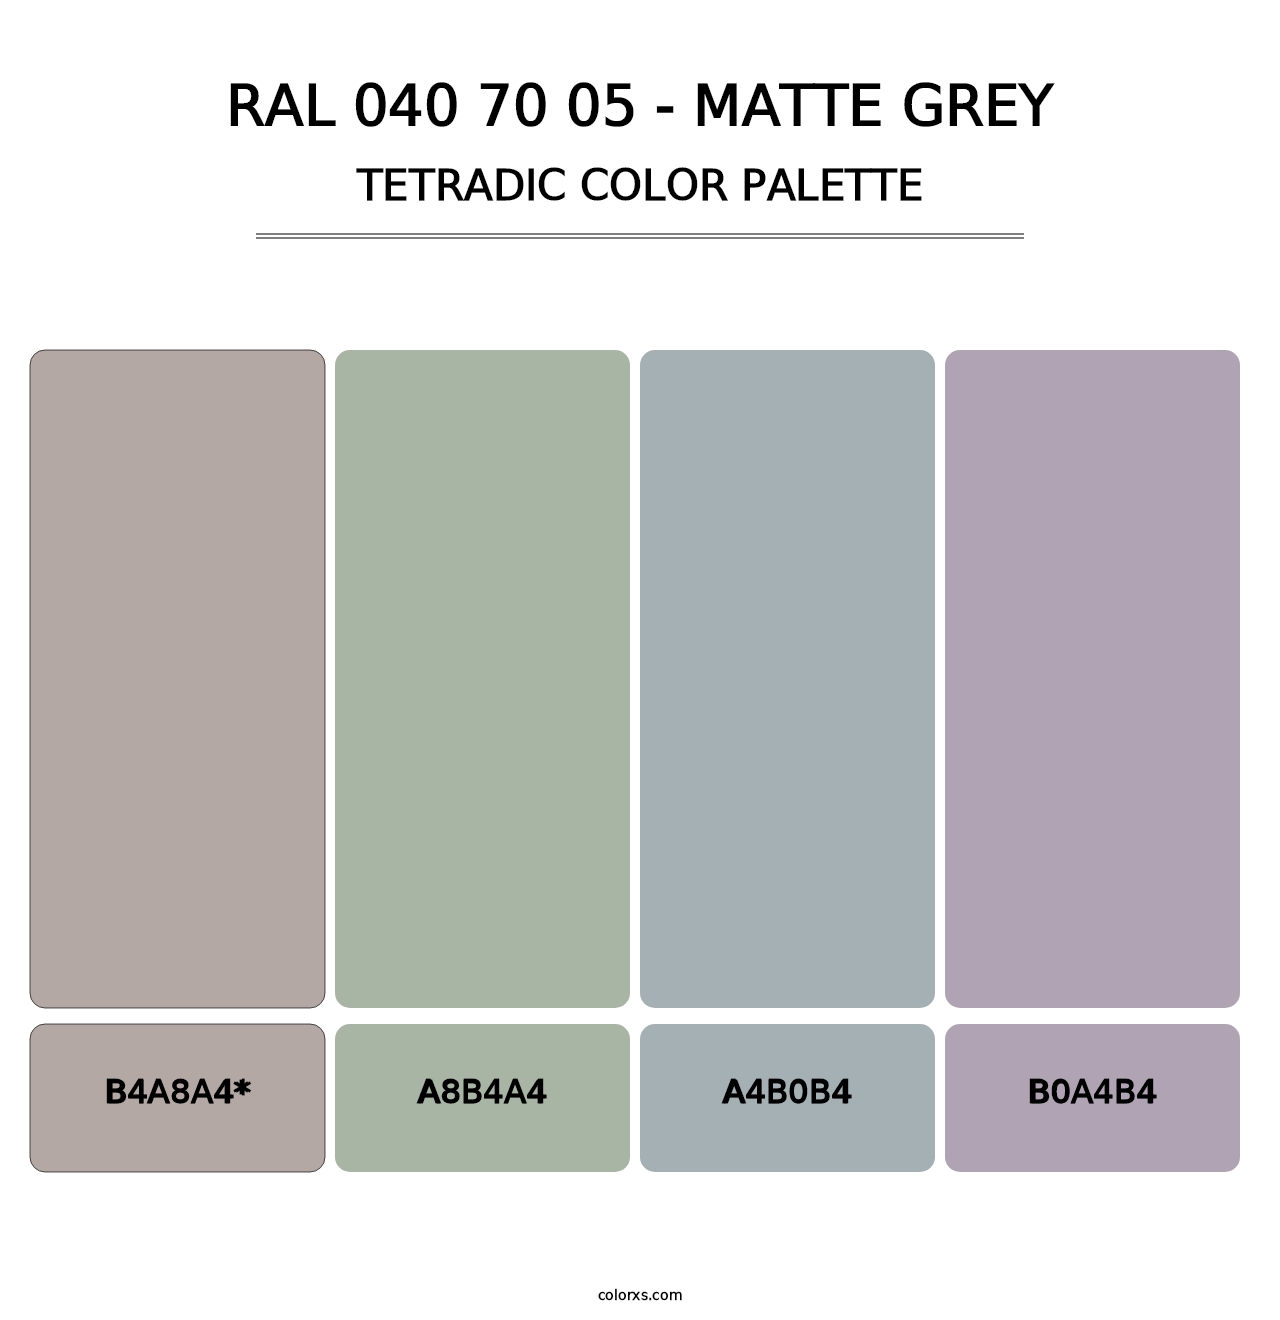 RAL 040 70 05 - Matte Grey - Tetradic Color Palette